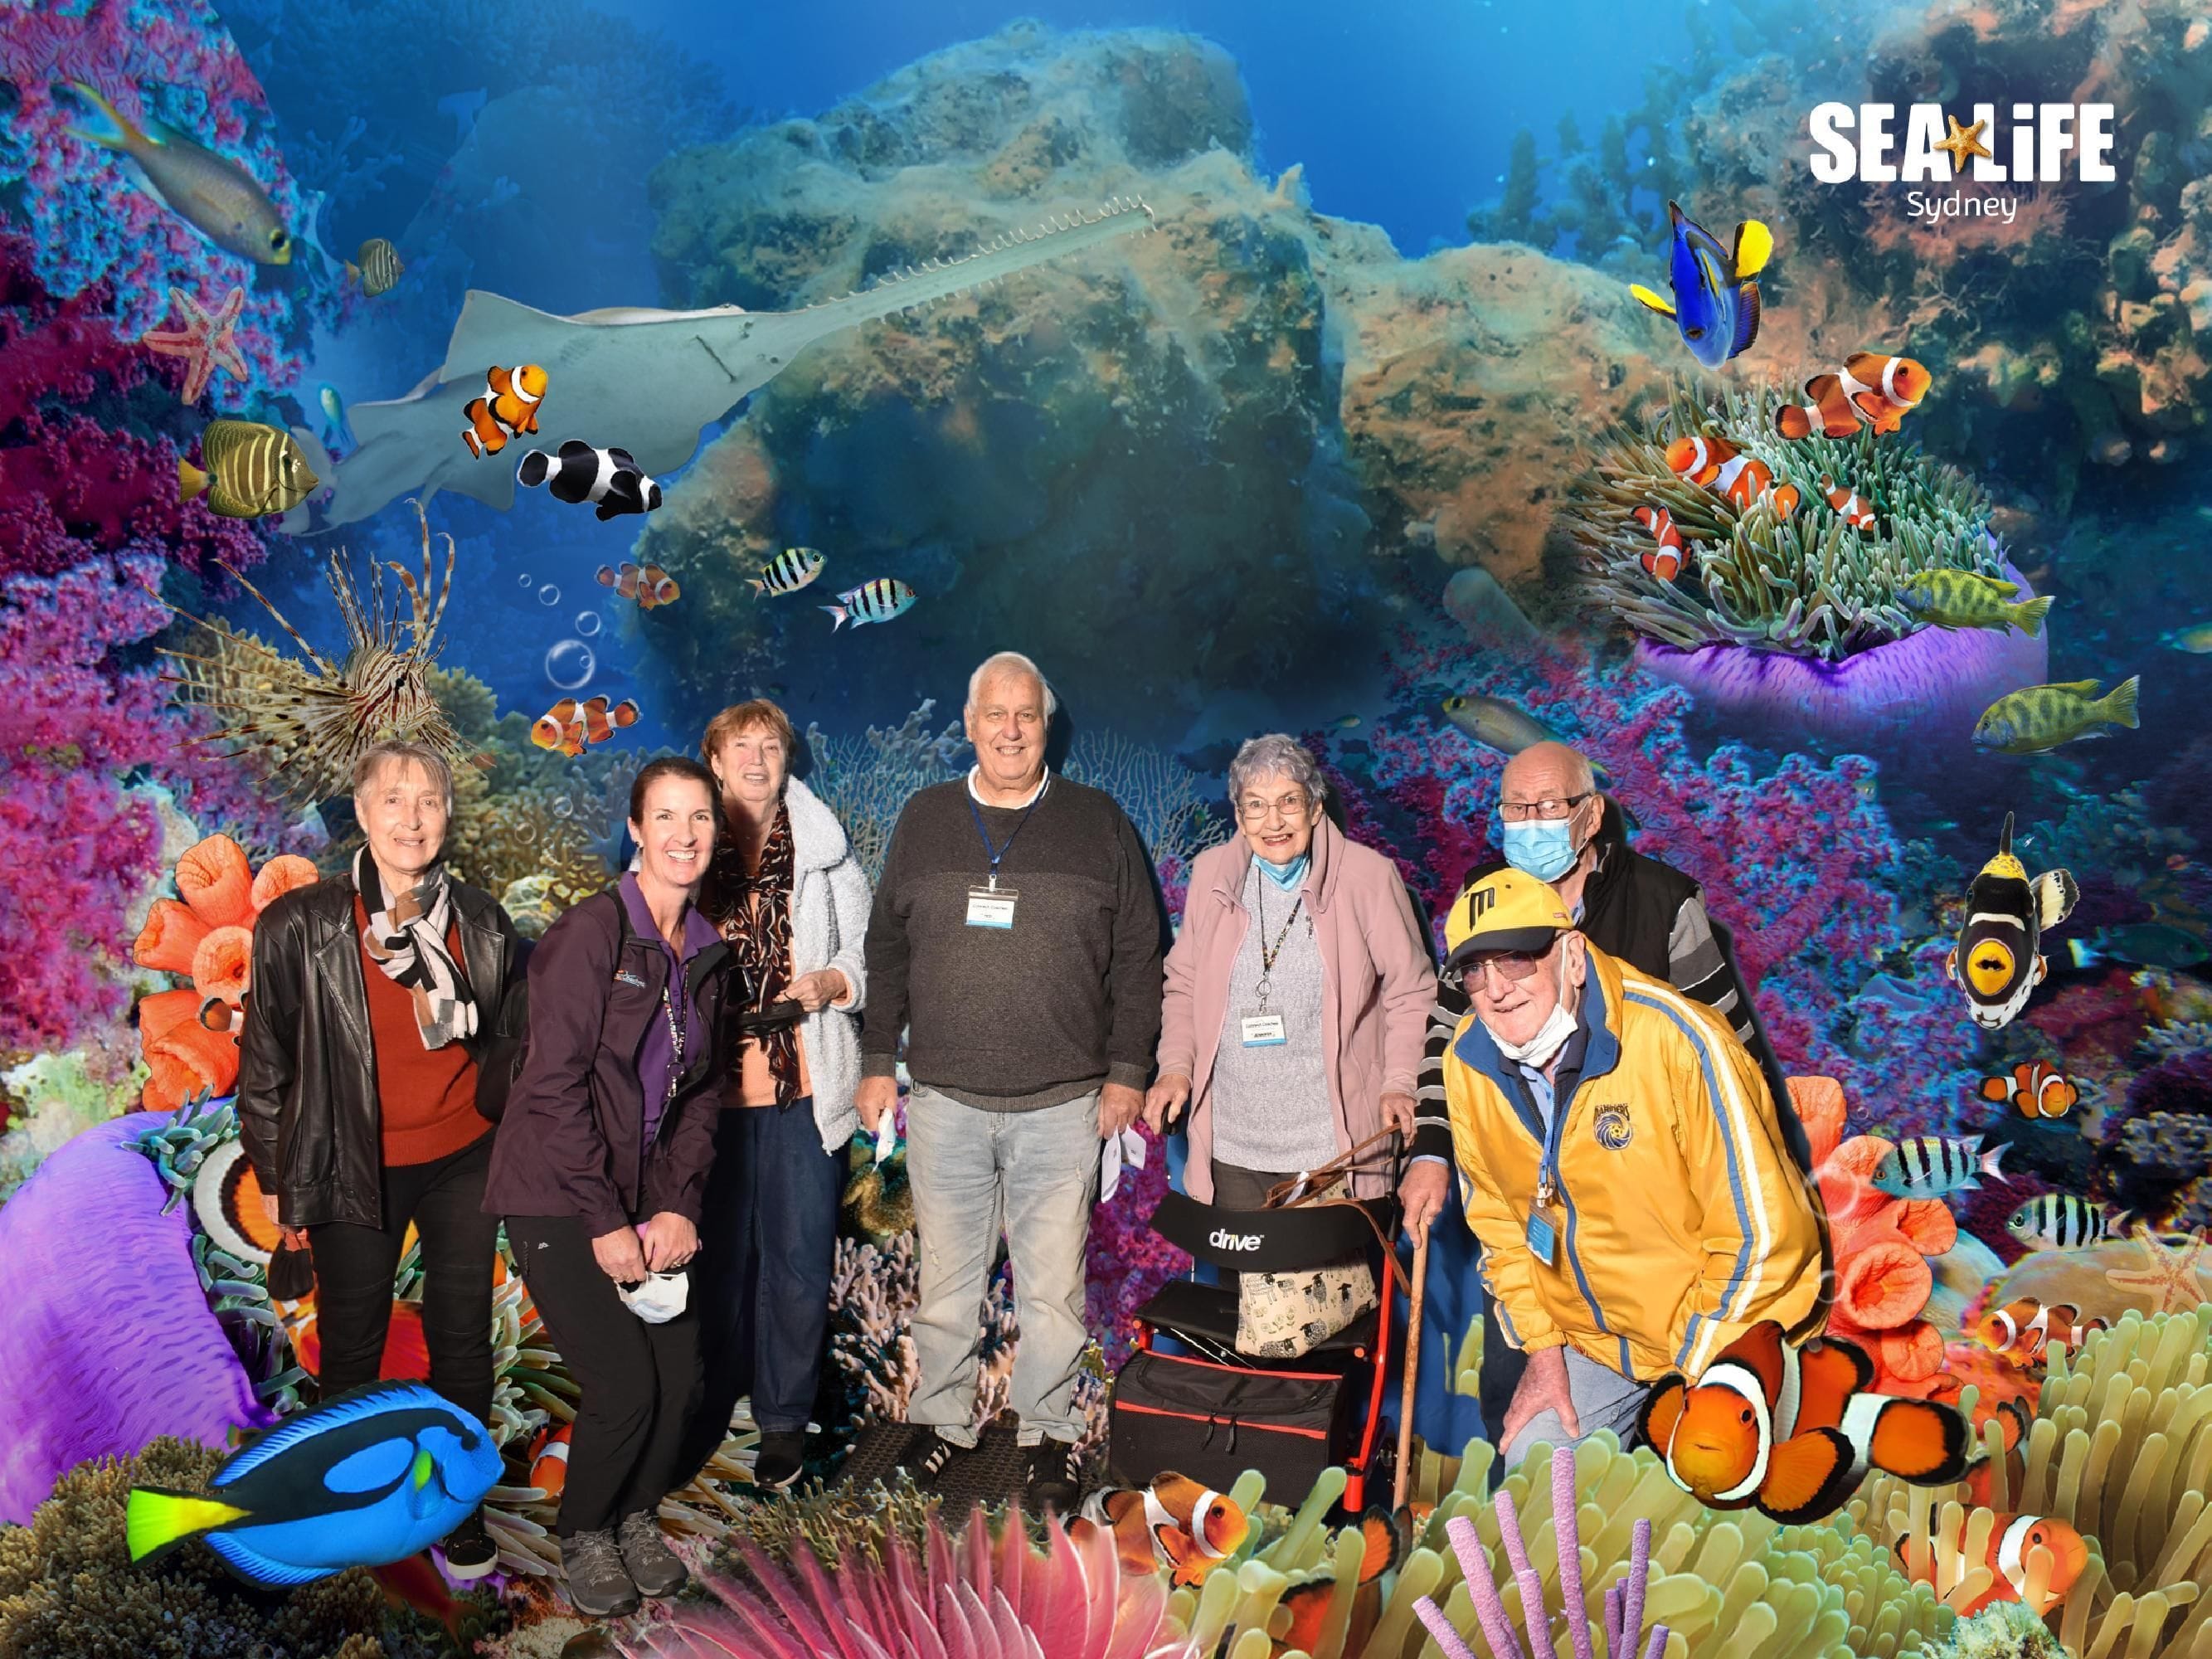 Sealife Sydney Aquarium - 12th July 2022 Image -62cd26b5700f0